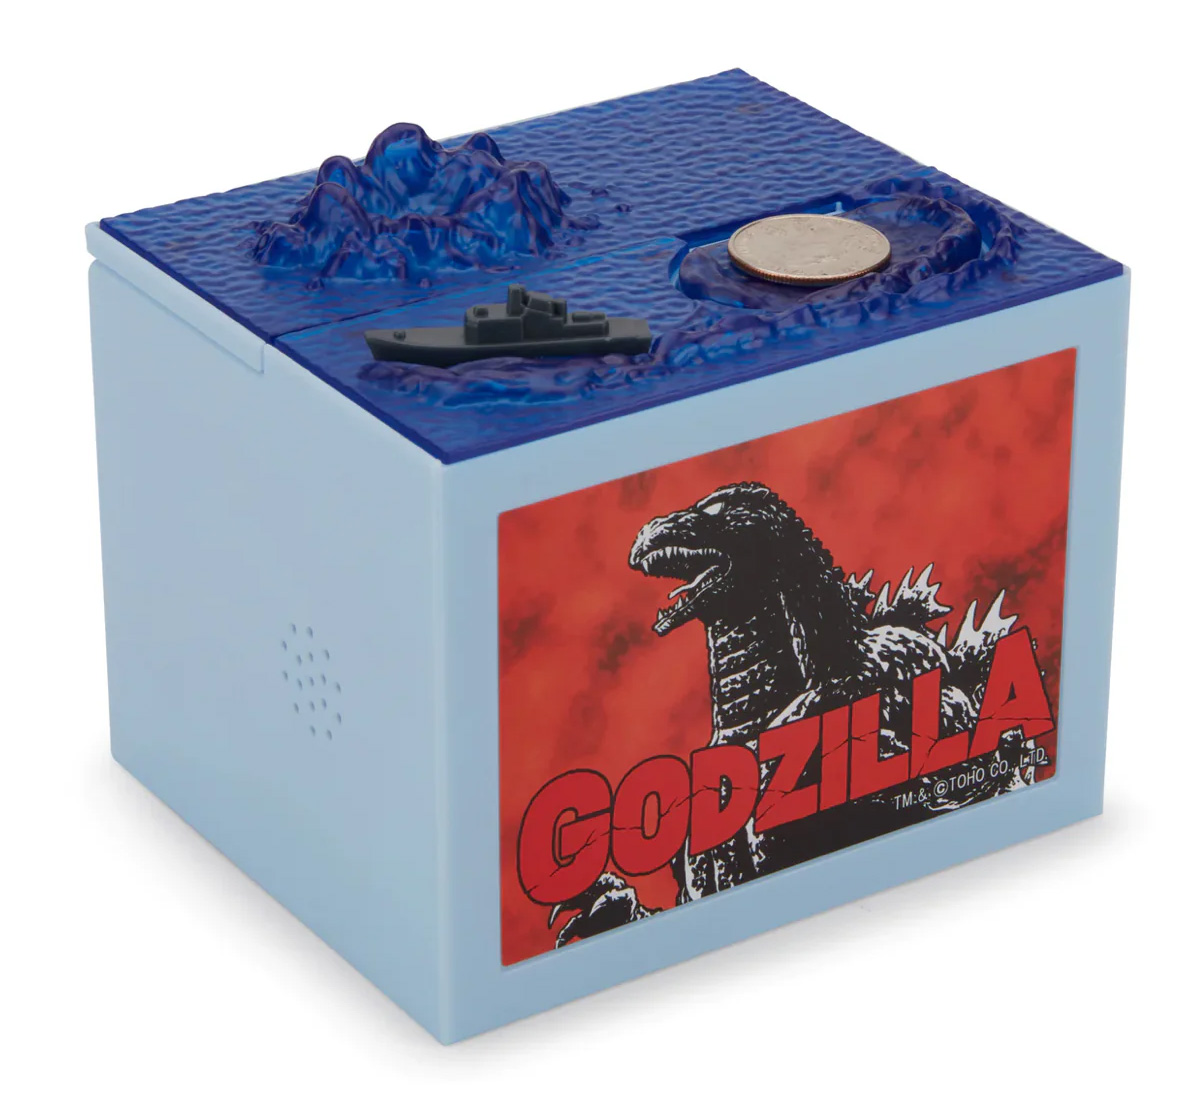 Kaiju Godzilla Itazura Electronic Safe with Illustrations by Shinji Nishikawa